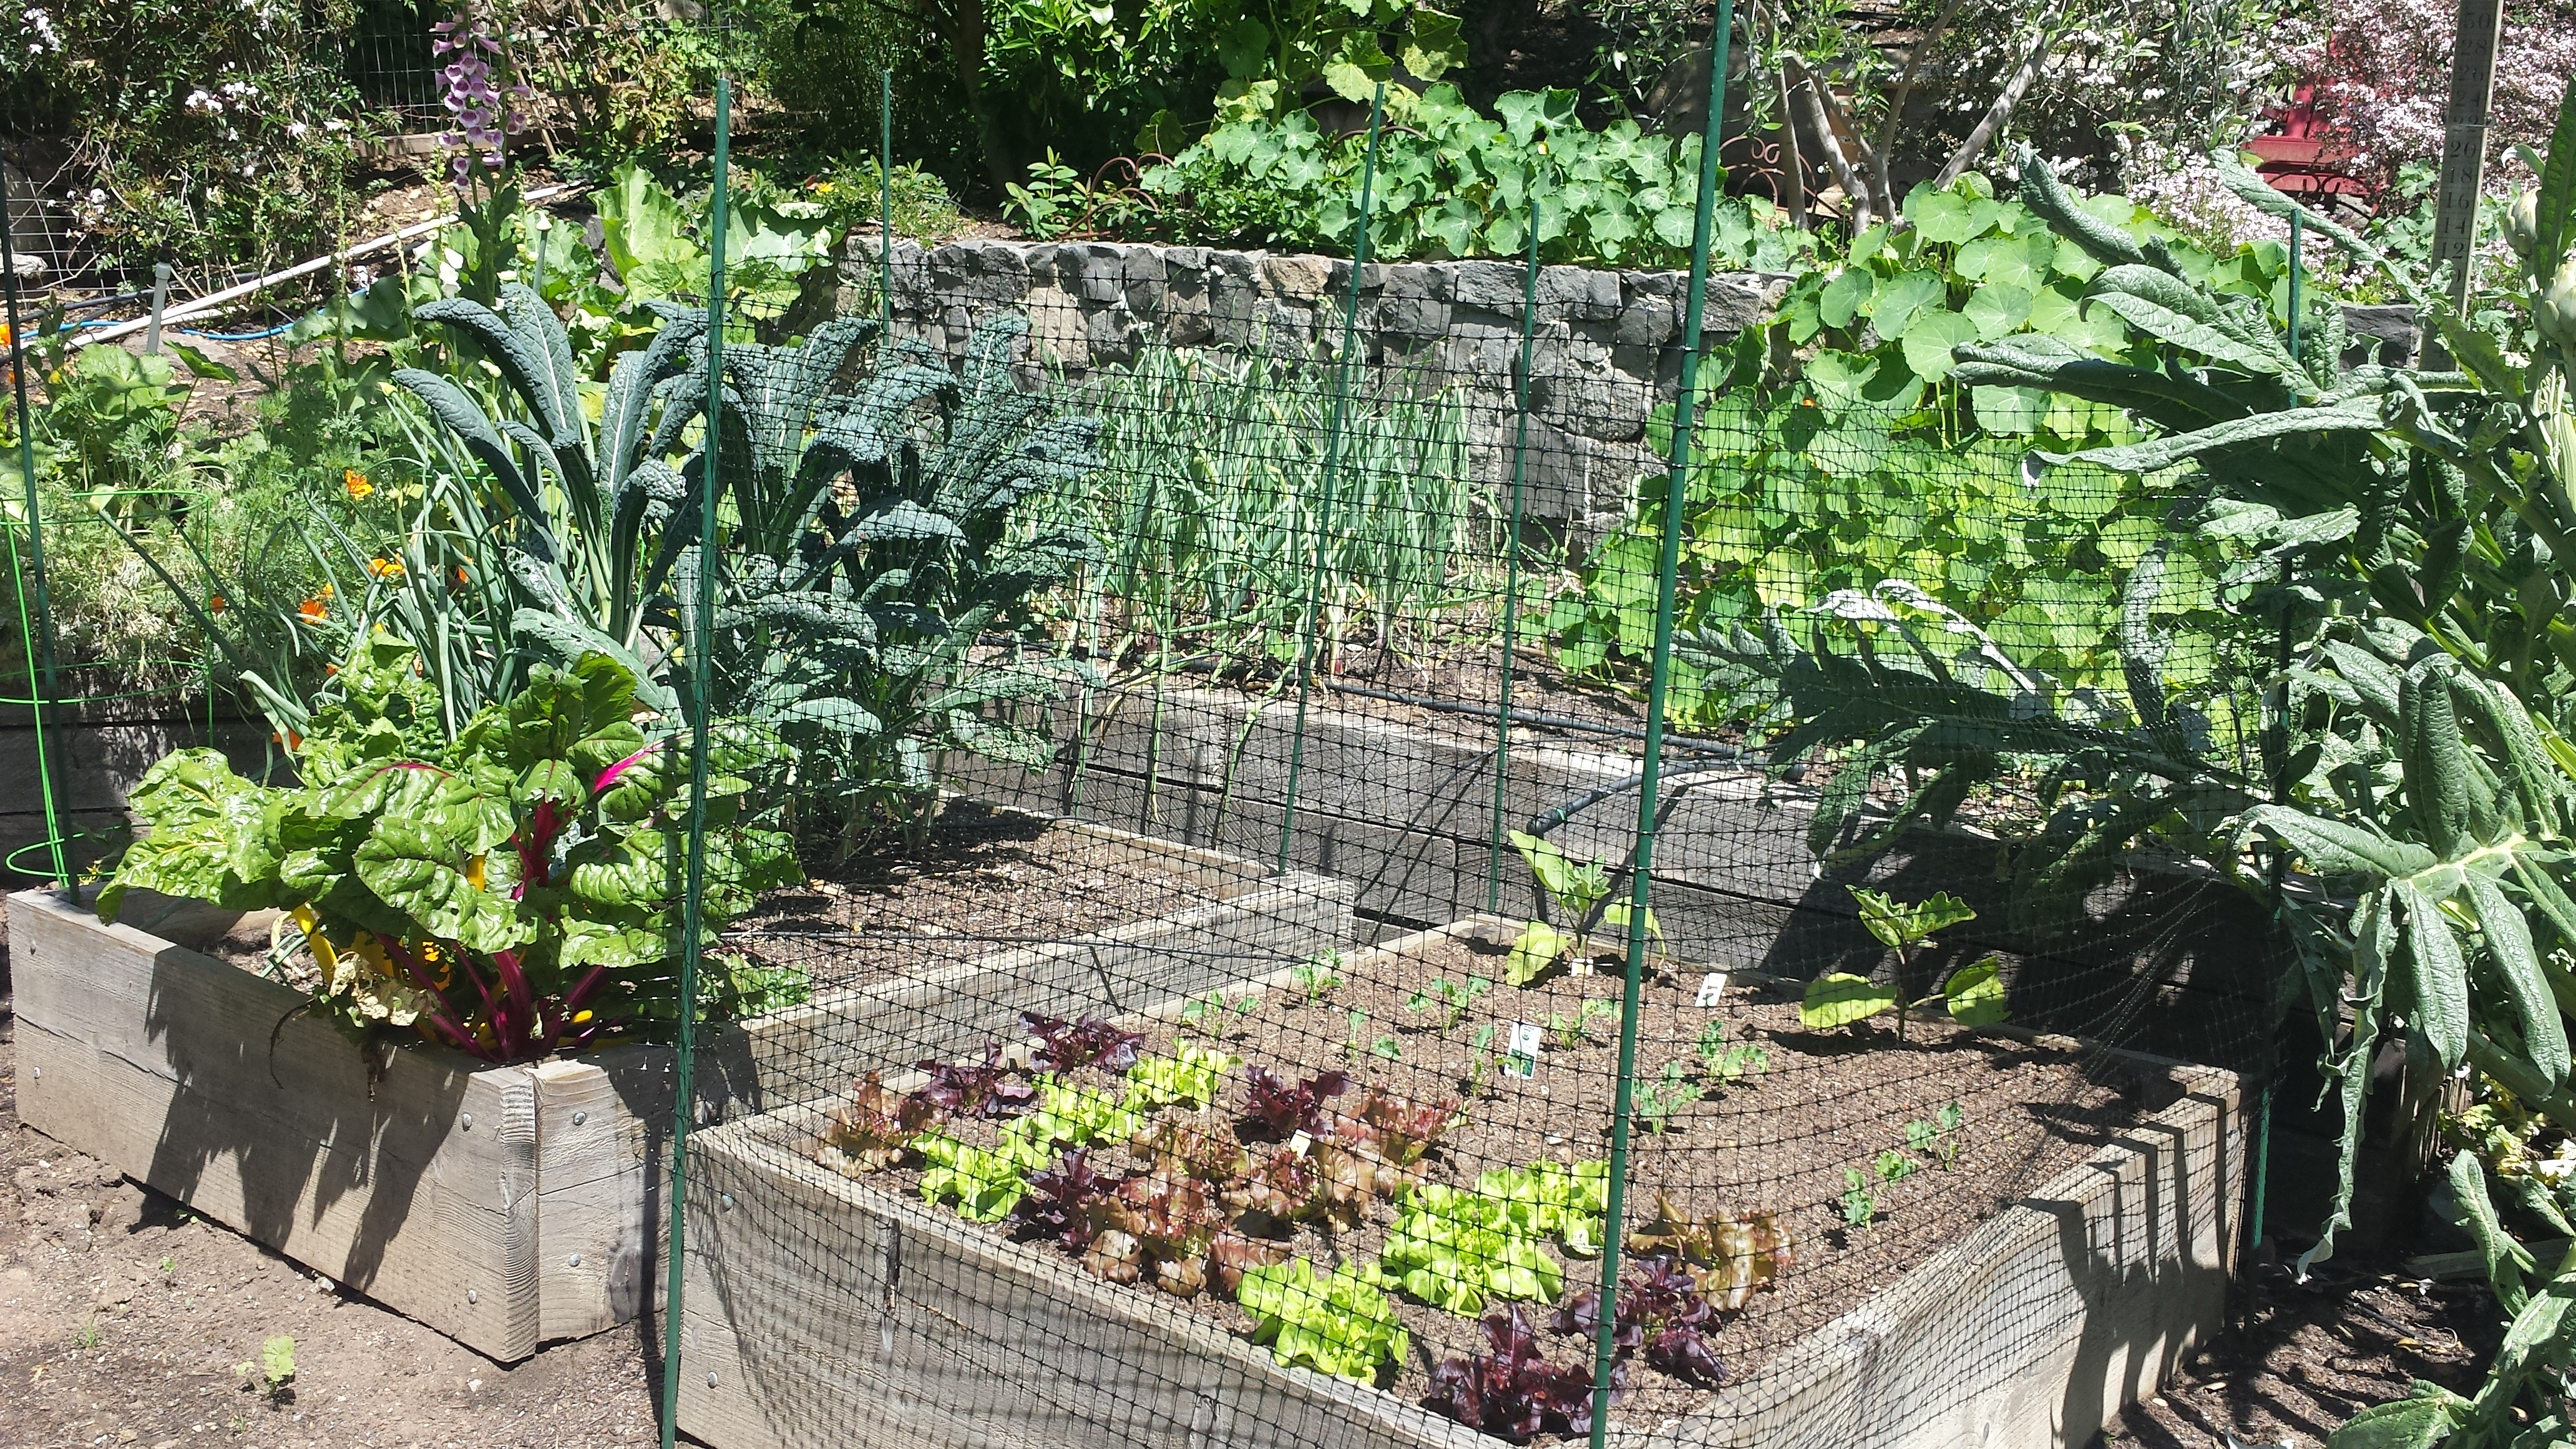 Best ideas about Patio Vegetable Garden Ideas
. Save or Pin creative ve able garden ideas Now.